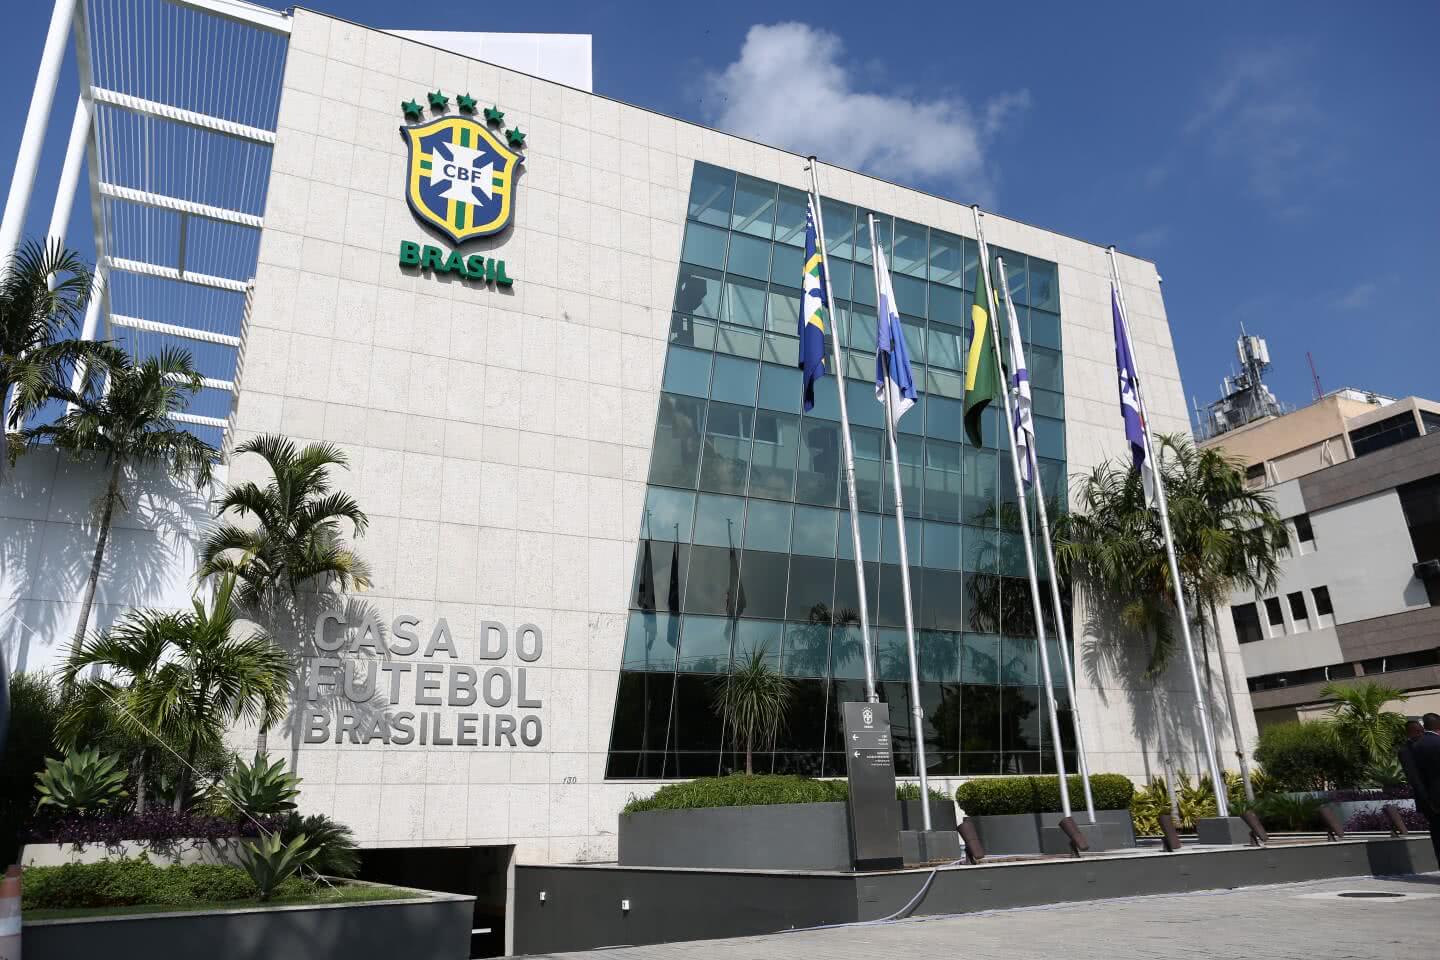 Sede da CBF, a entidade máxima do futebol brasileiro